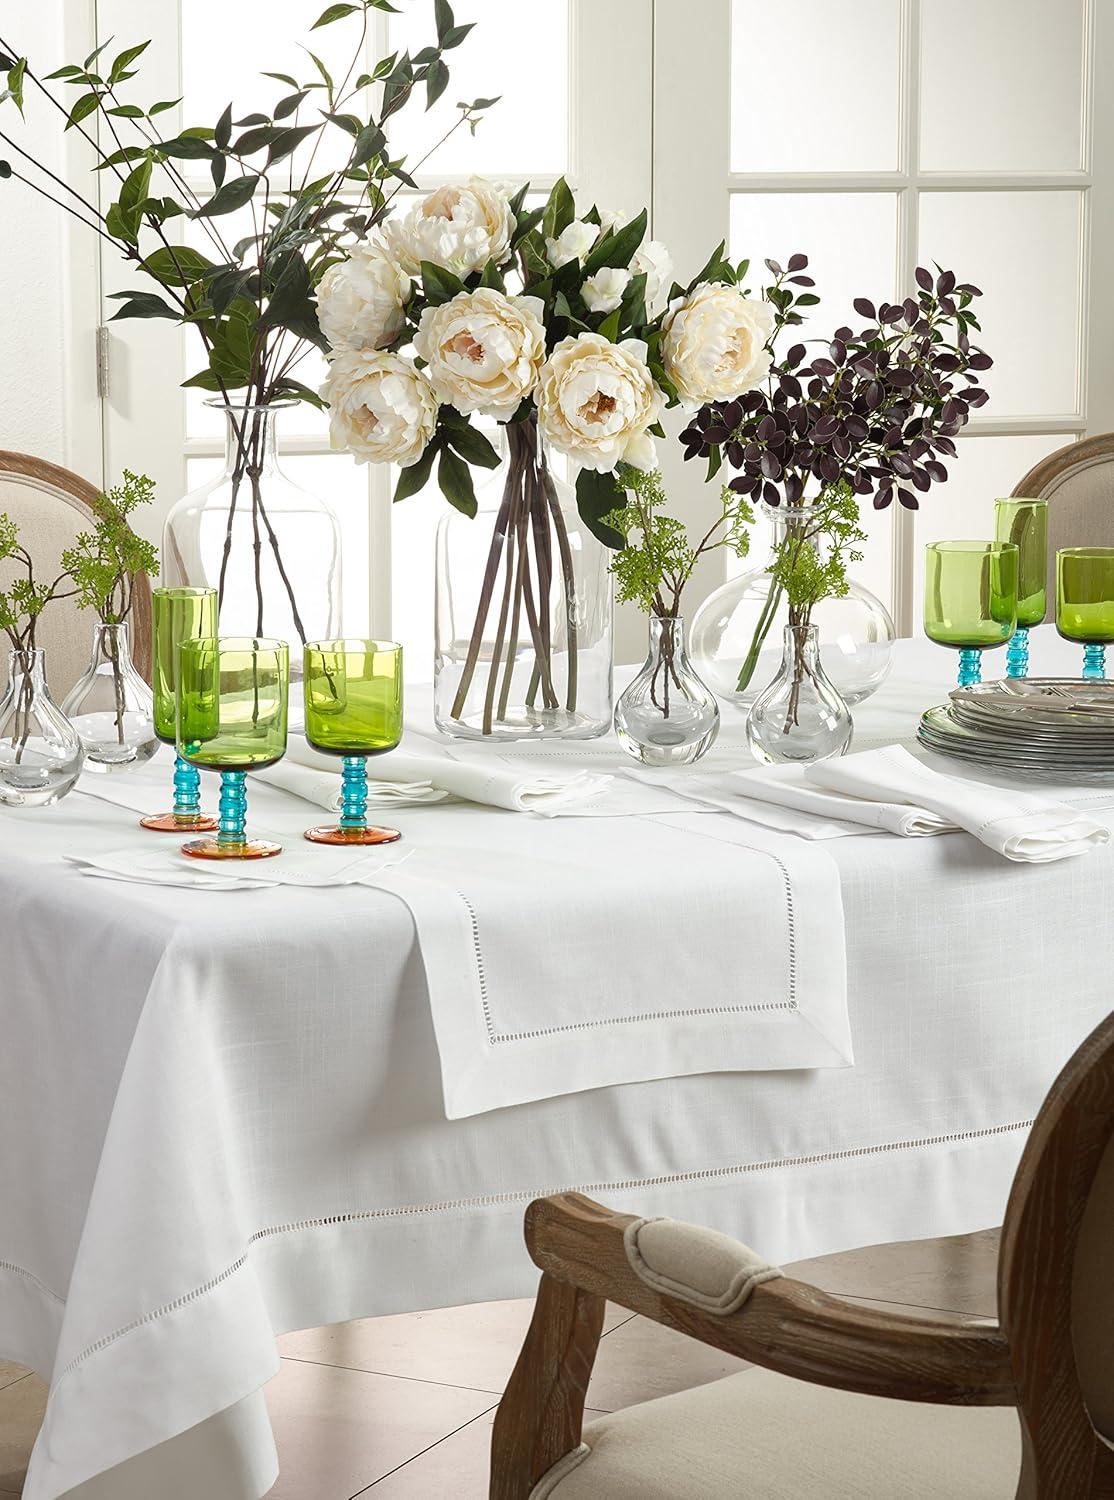 Elegant Rectangular Hemstitched Fabric Tablecloth 70" x 120" White